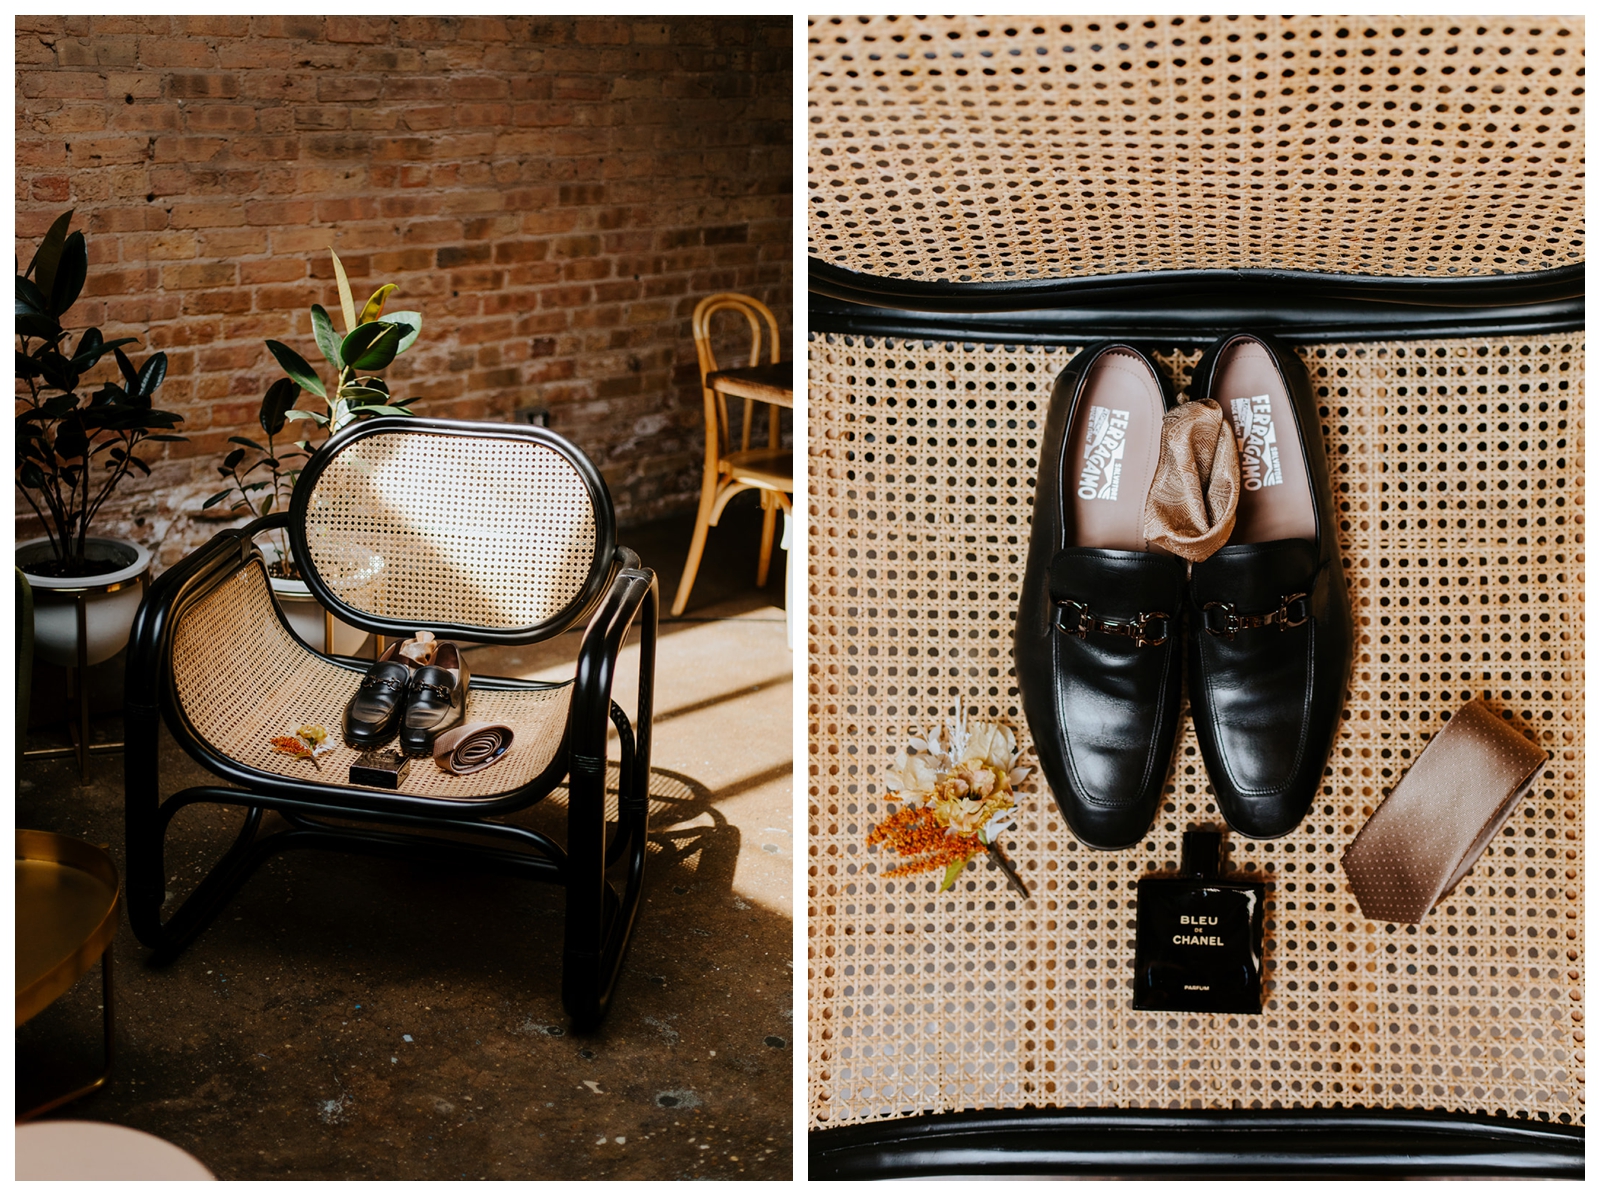 Ferragamo shoes for men; Ferragamo wedding shoes; getting ready photos; getting ready photo arrangements